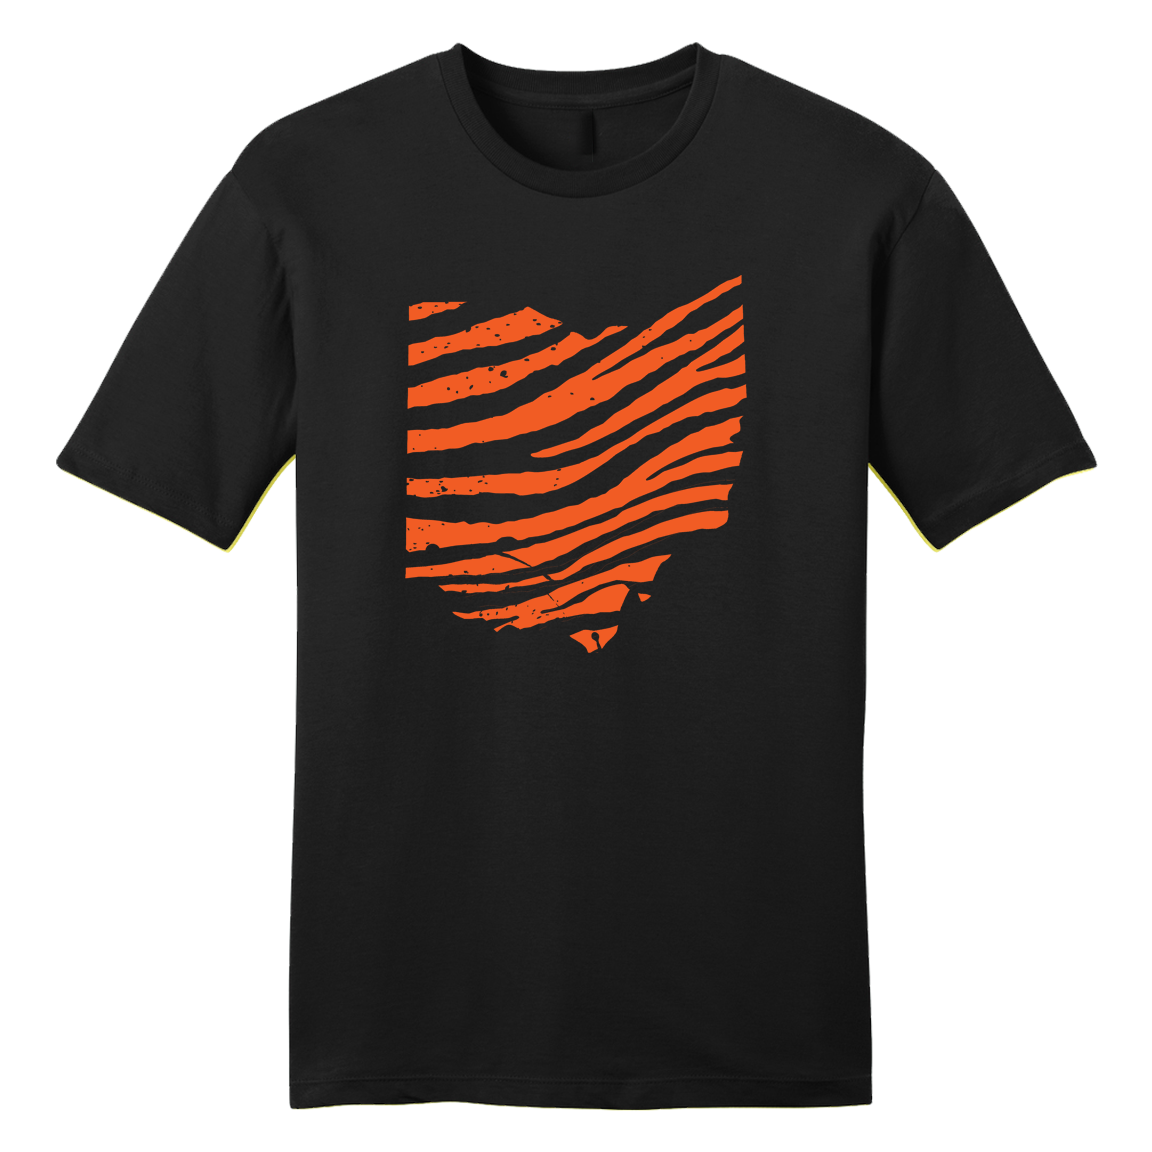 Tiger Stripe Ohio Black - Cincy Shirts